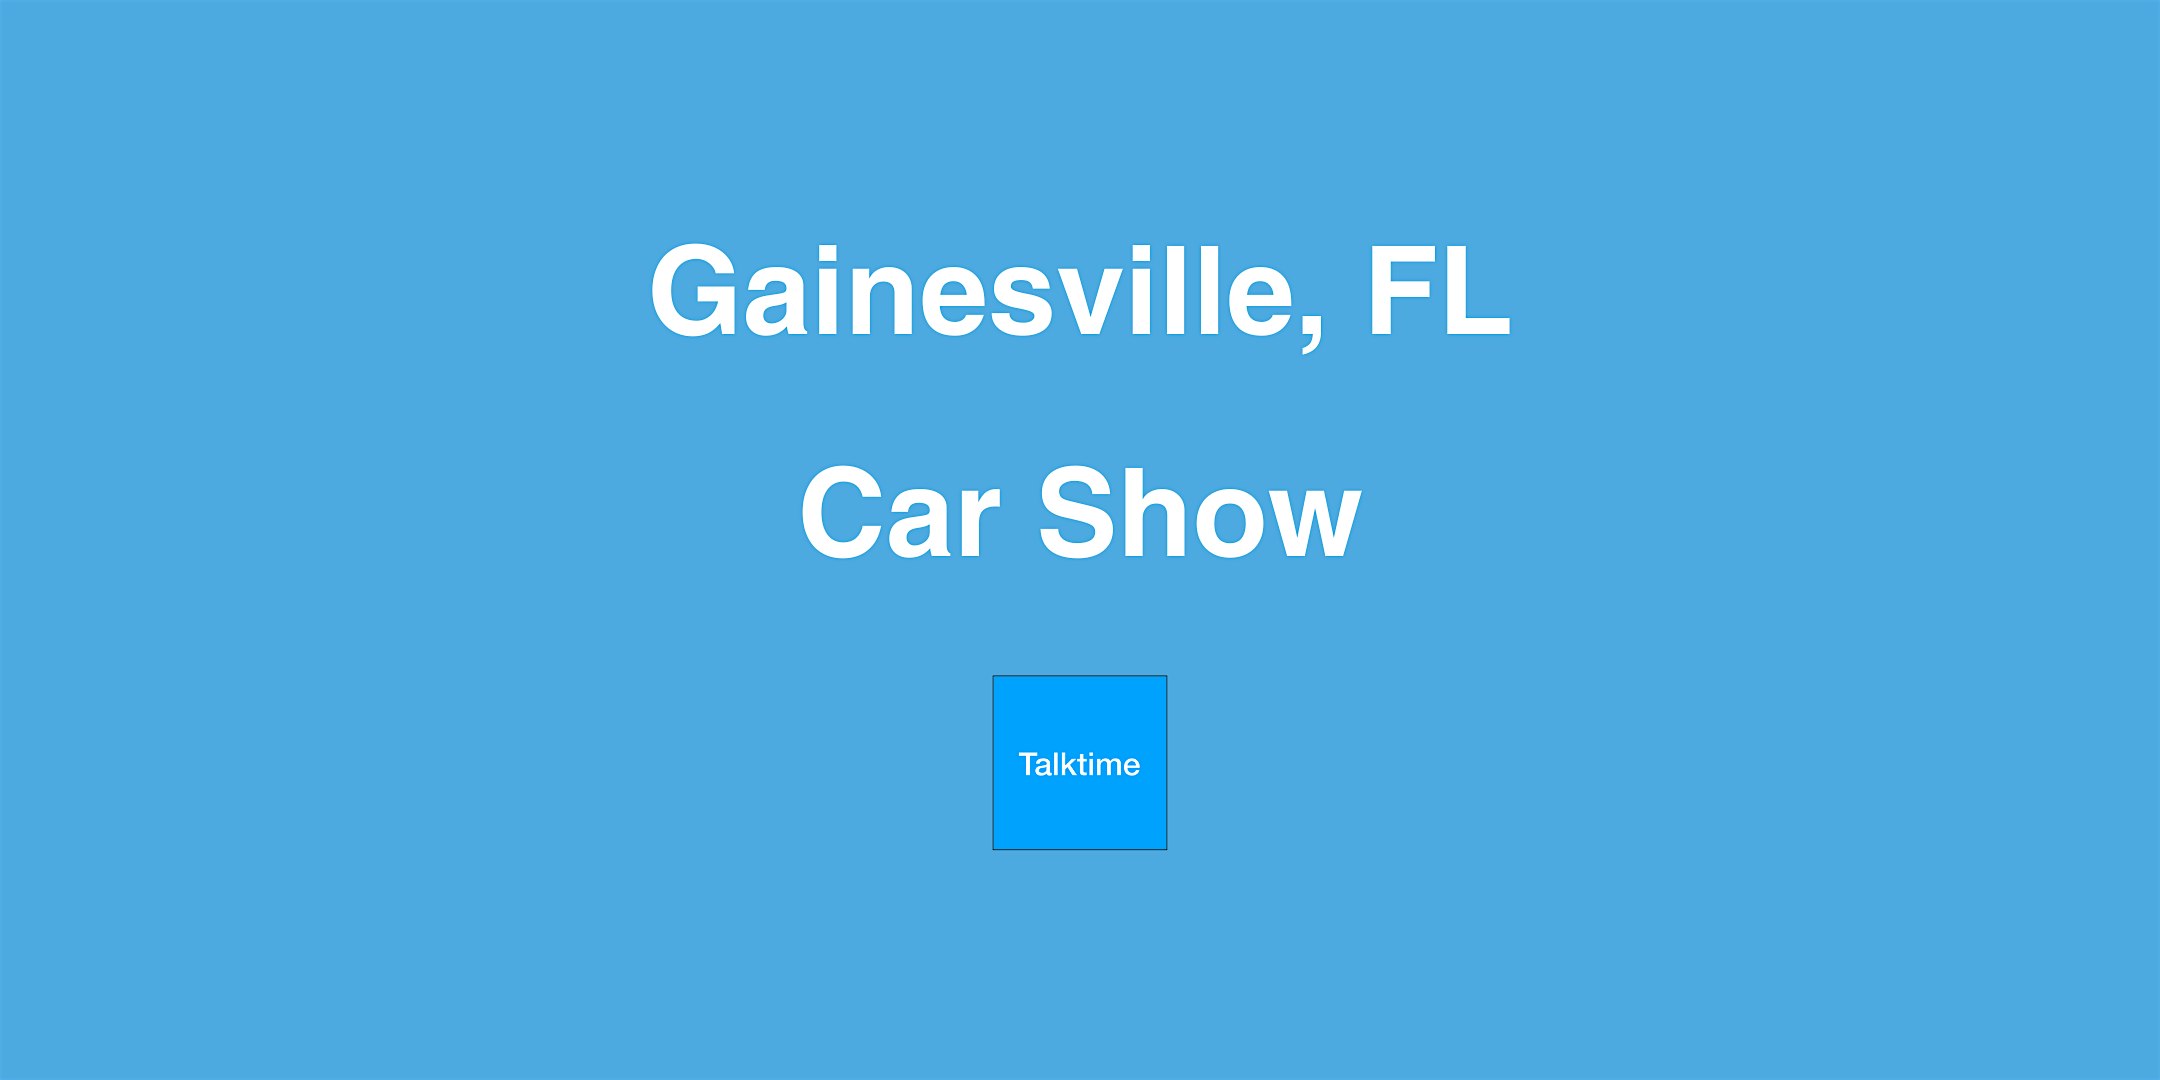 Car Show - Gainesville